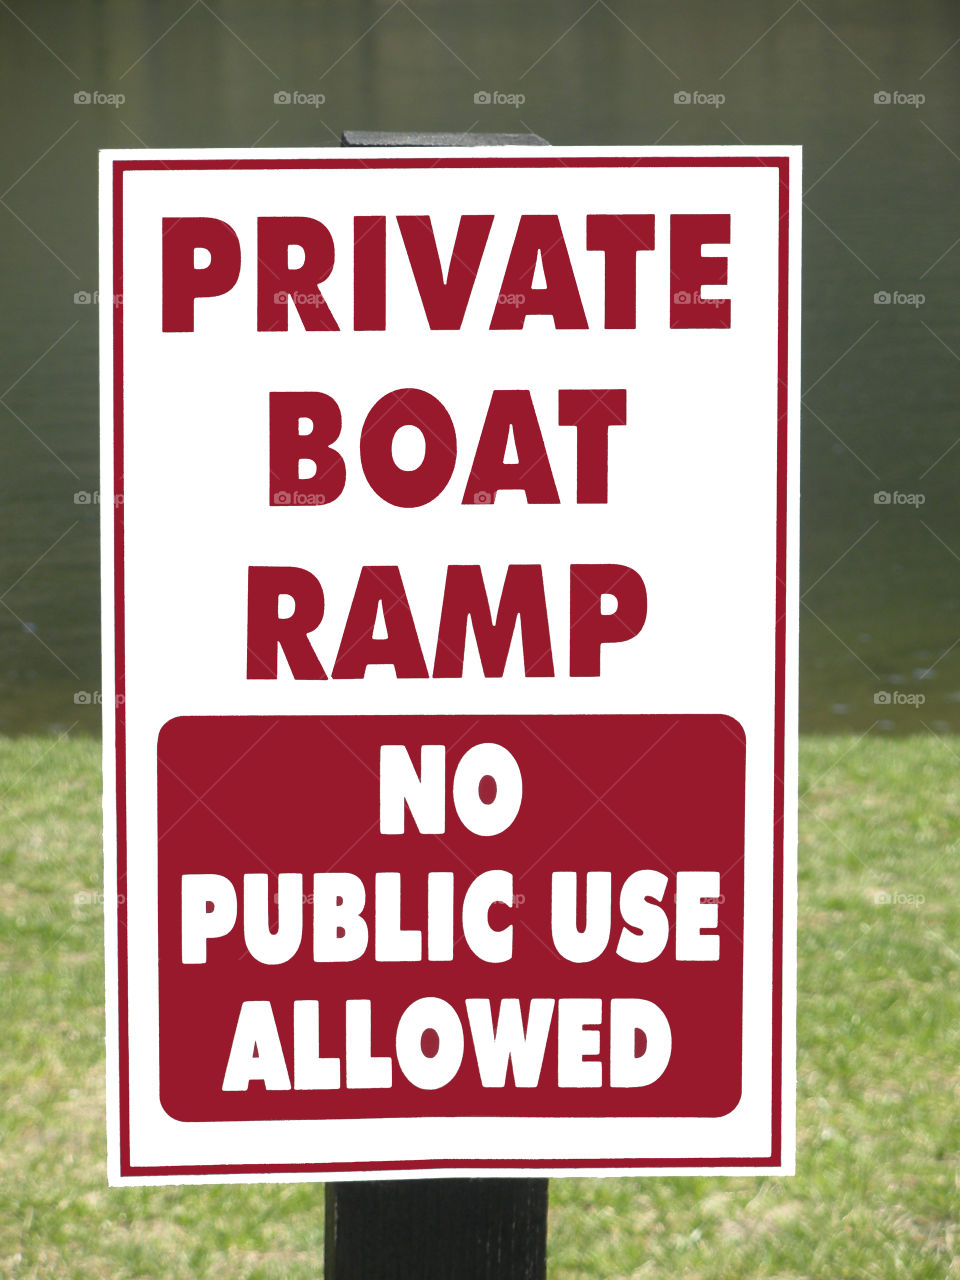 Private boat ramp